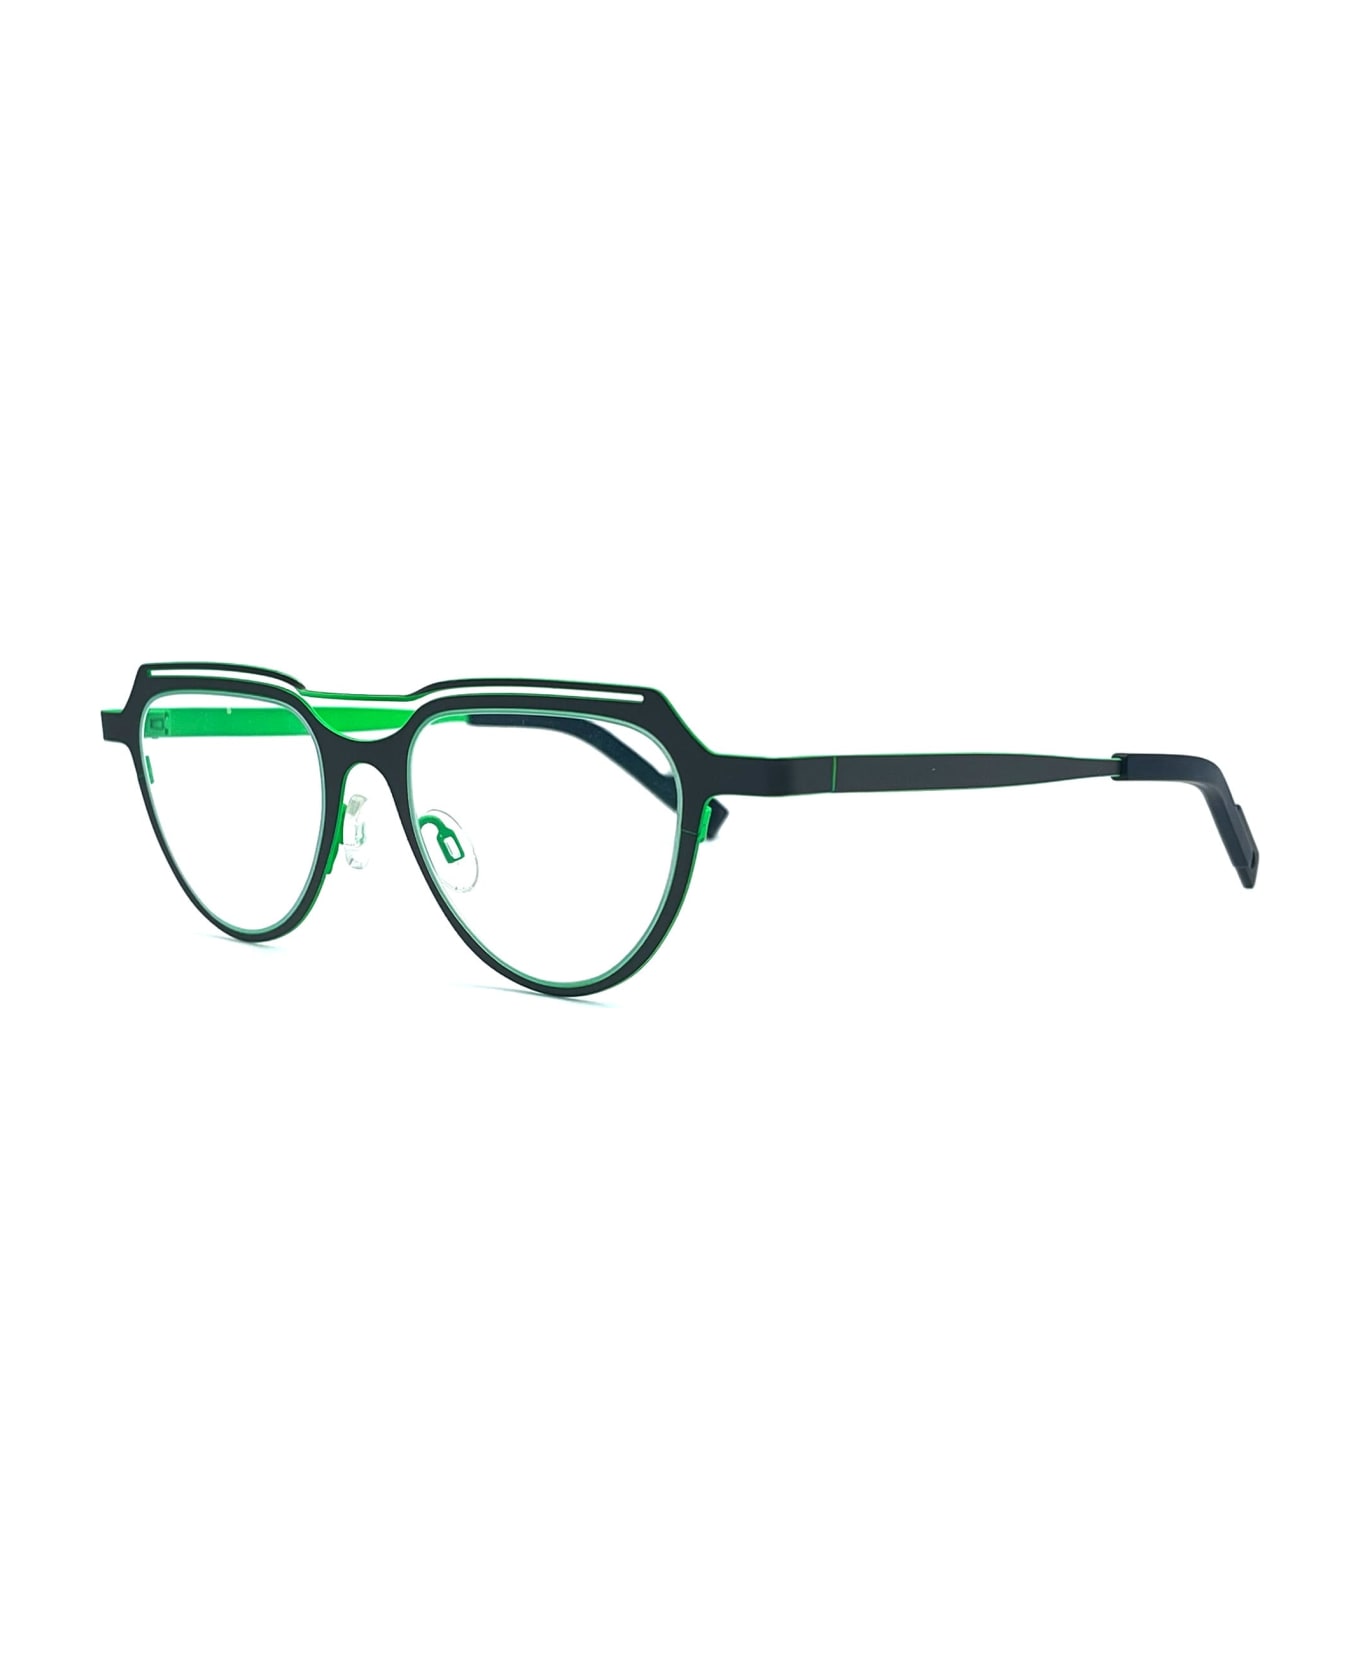 Theo Eyewear Dice - 373 Glasses - green アイウェア